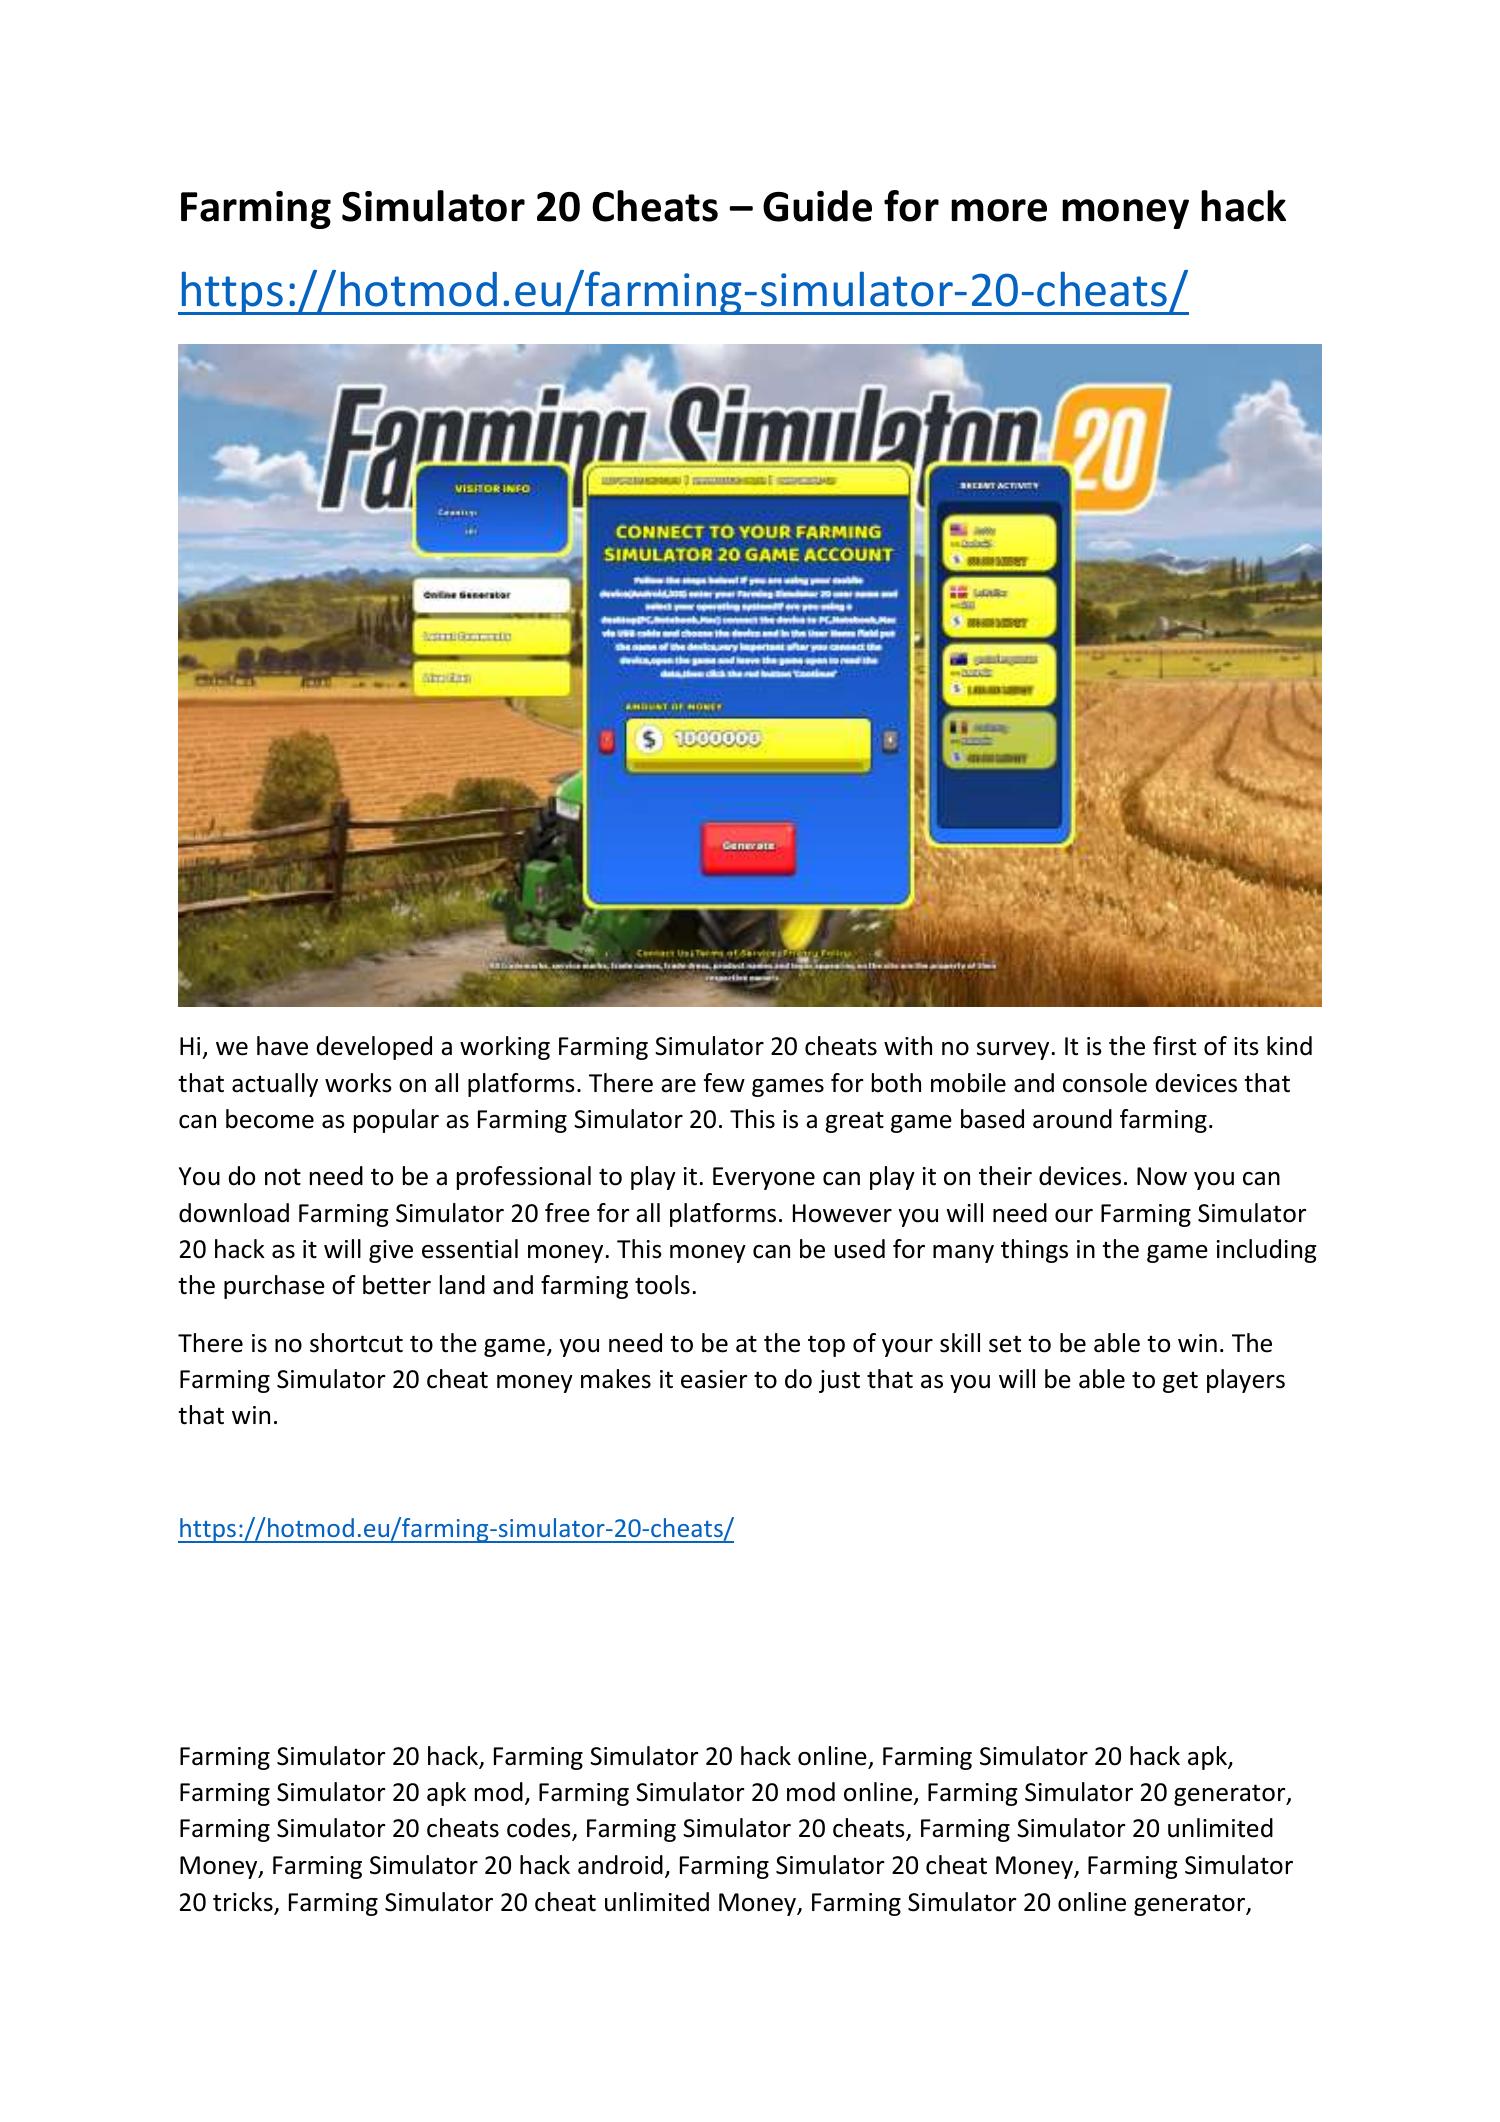 Farming Simulator 20 APK (Android Game) - Free Download